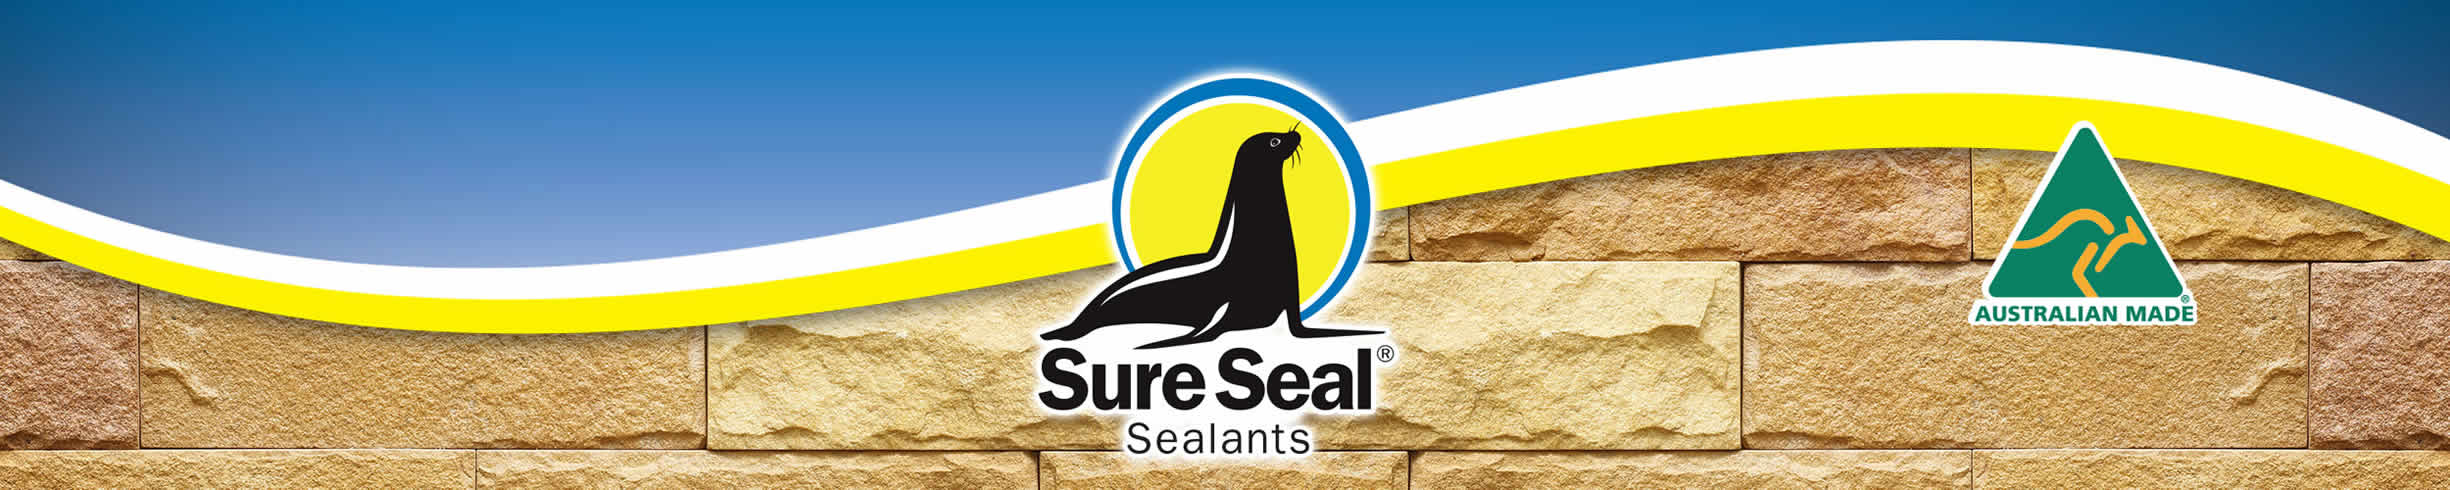 Sure Seal Sealants